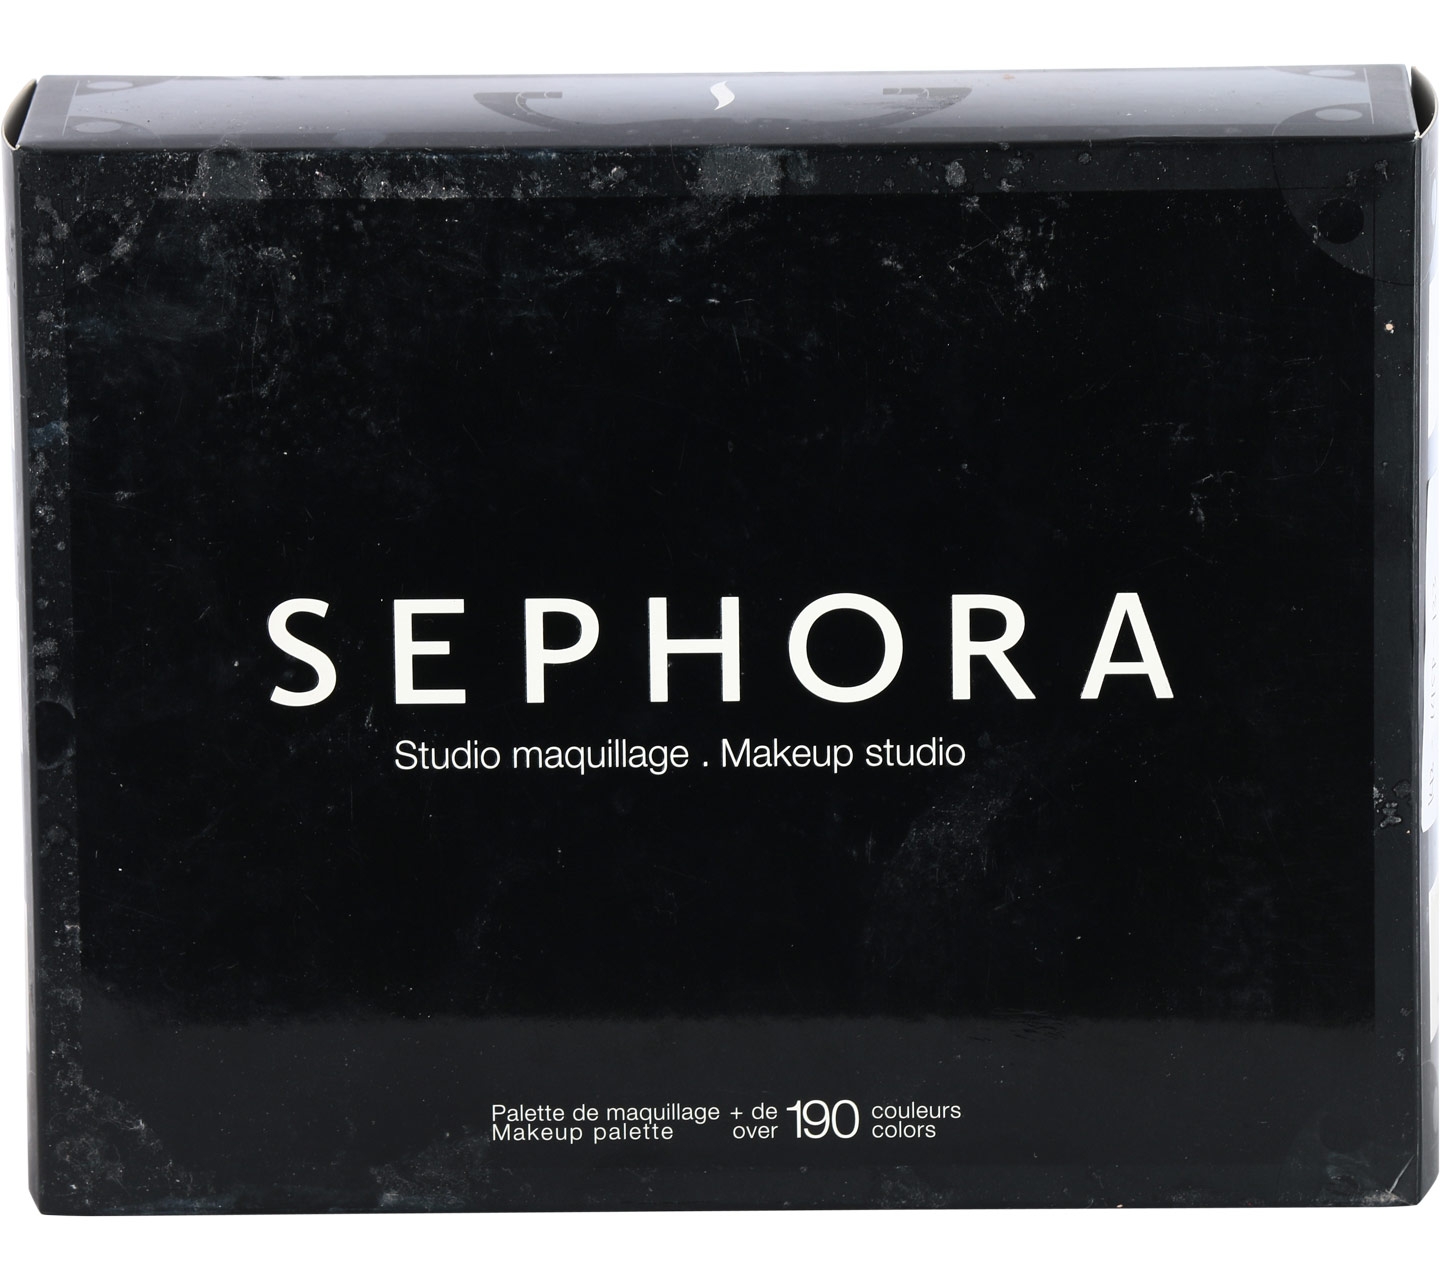 Sephora Makeup Studio Sets and Palette